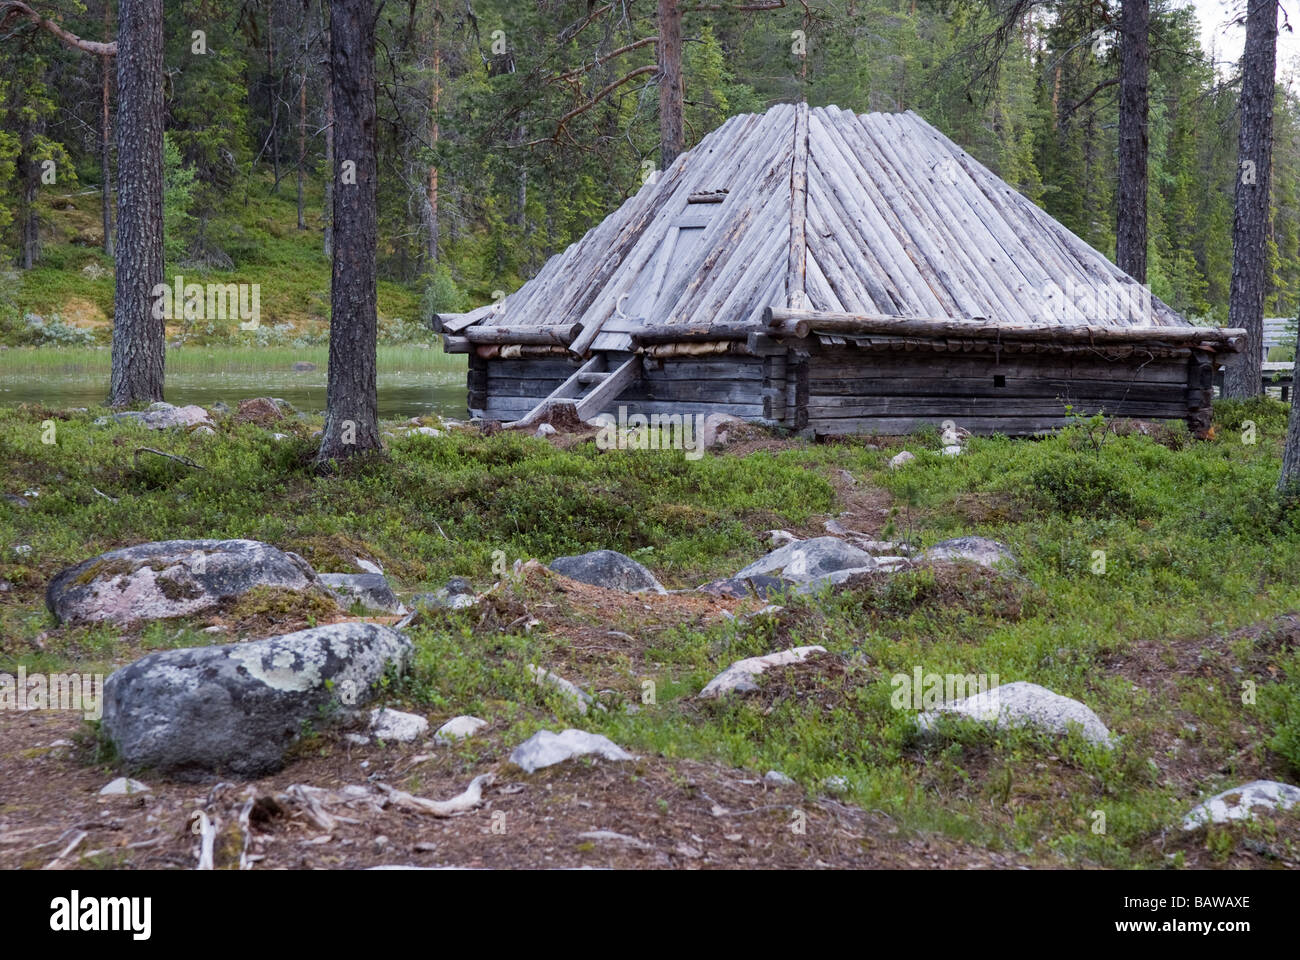 Gåhtie (traditional Sami house) in Båtsuoj Samecenter, Gasa, Sweden, Scandinavia, Europe Stock Photo